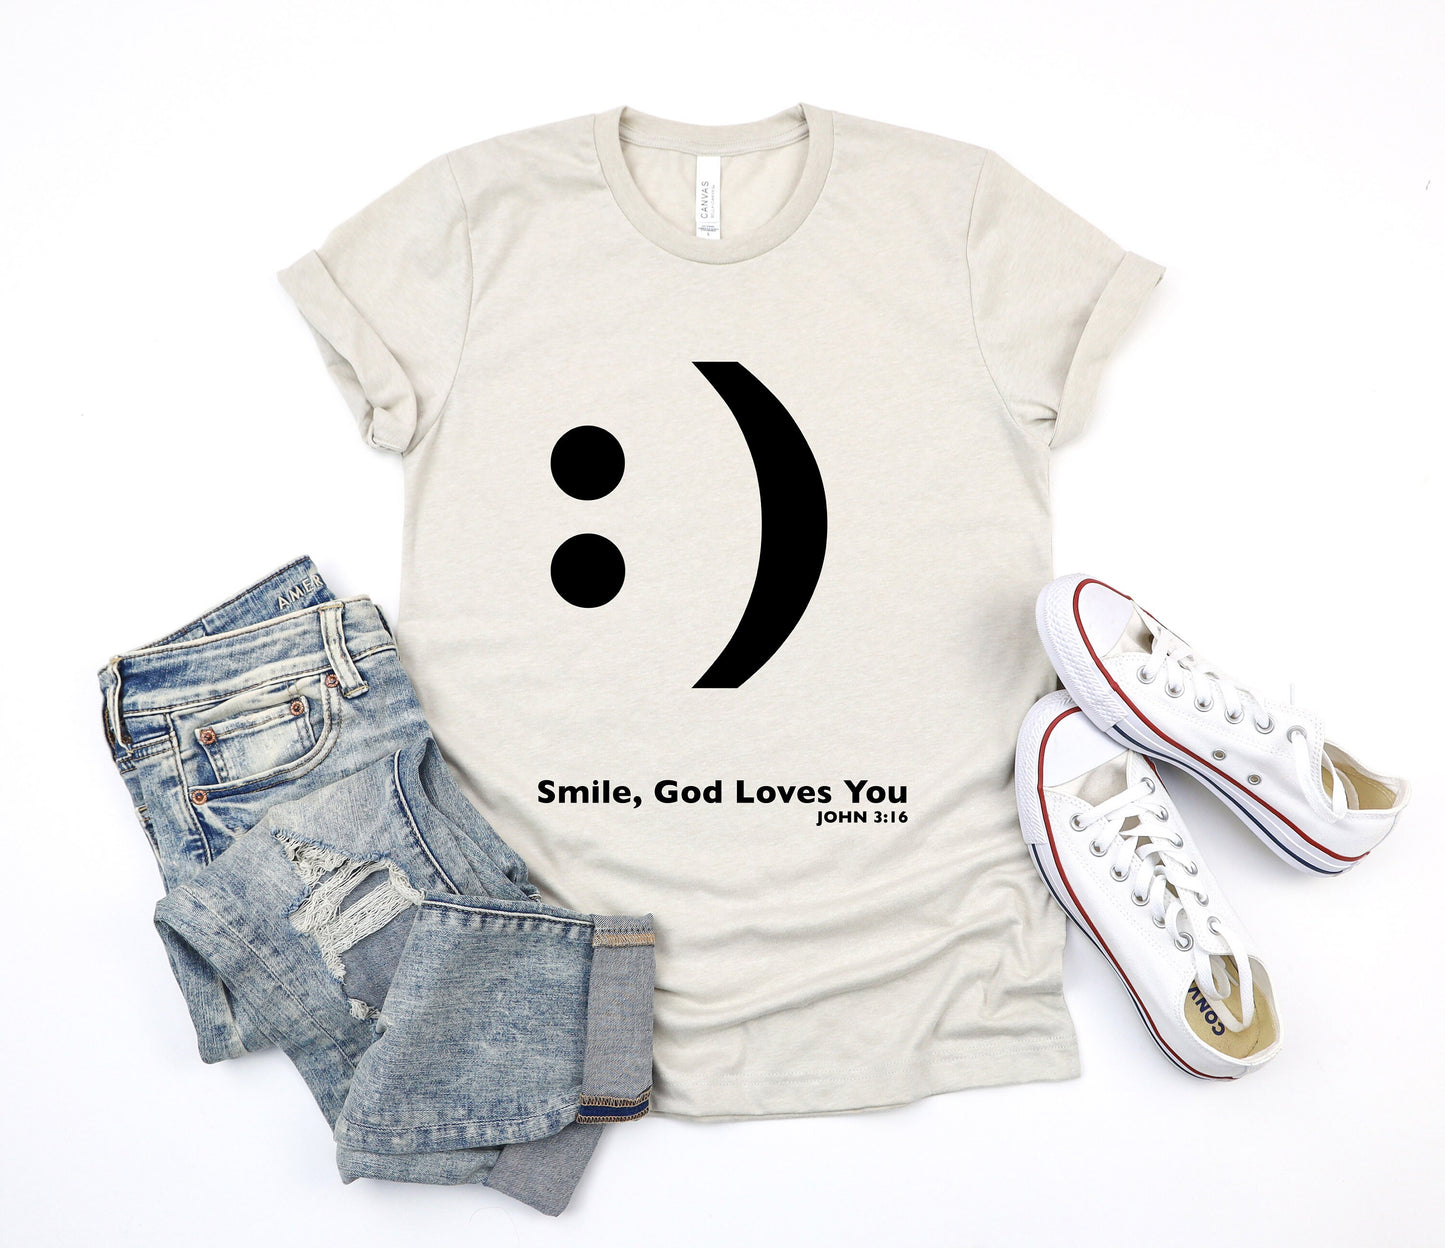 Smile God Loves You Christian Uplifting Ultra Soft Graphic Tee Unisex Soft Tee T-shirt for Women or Men